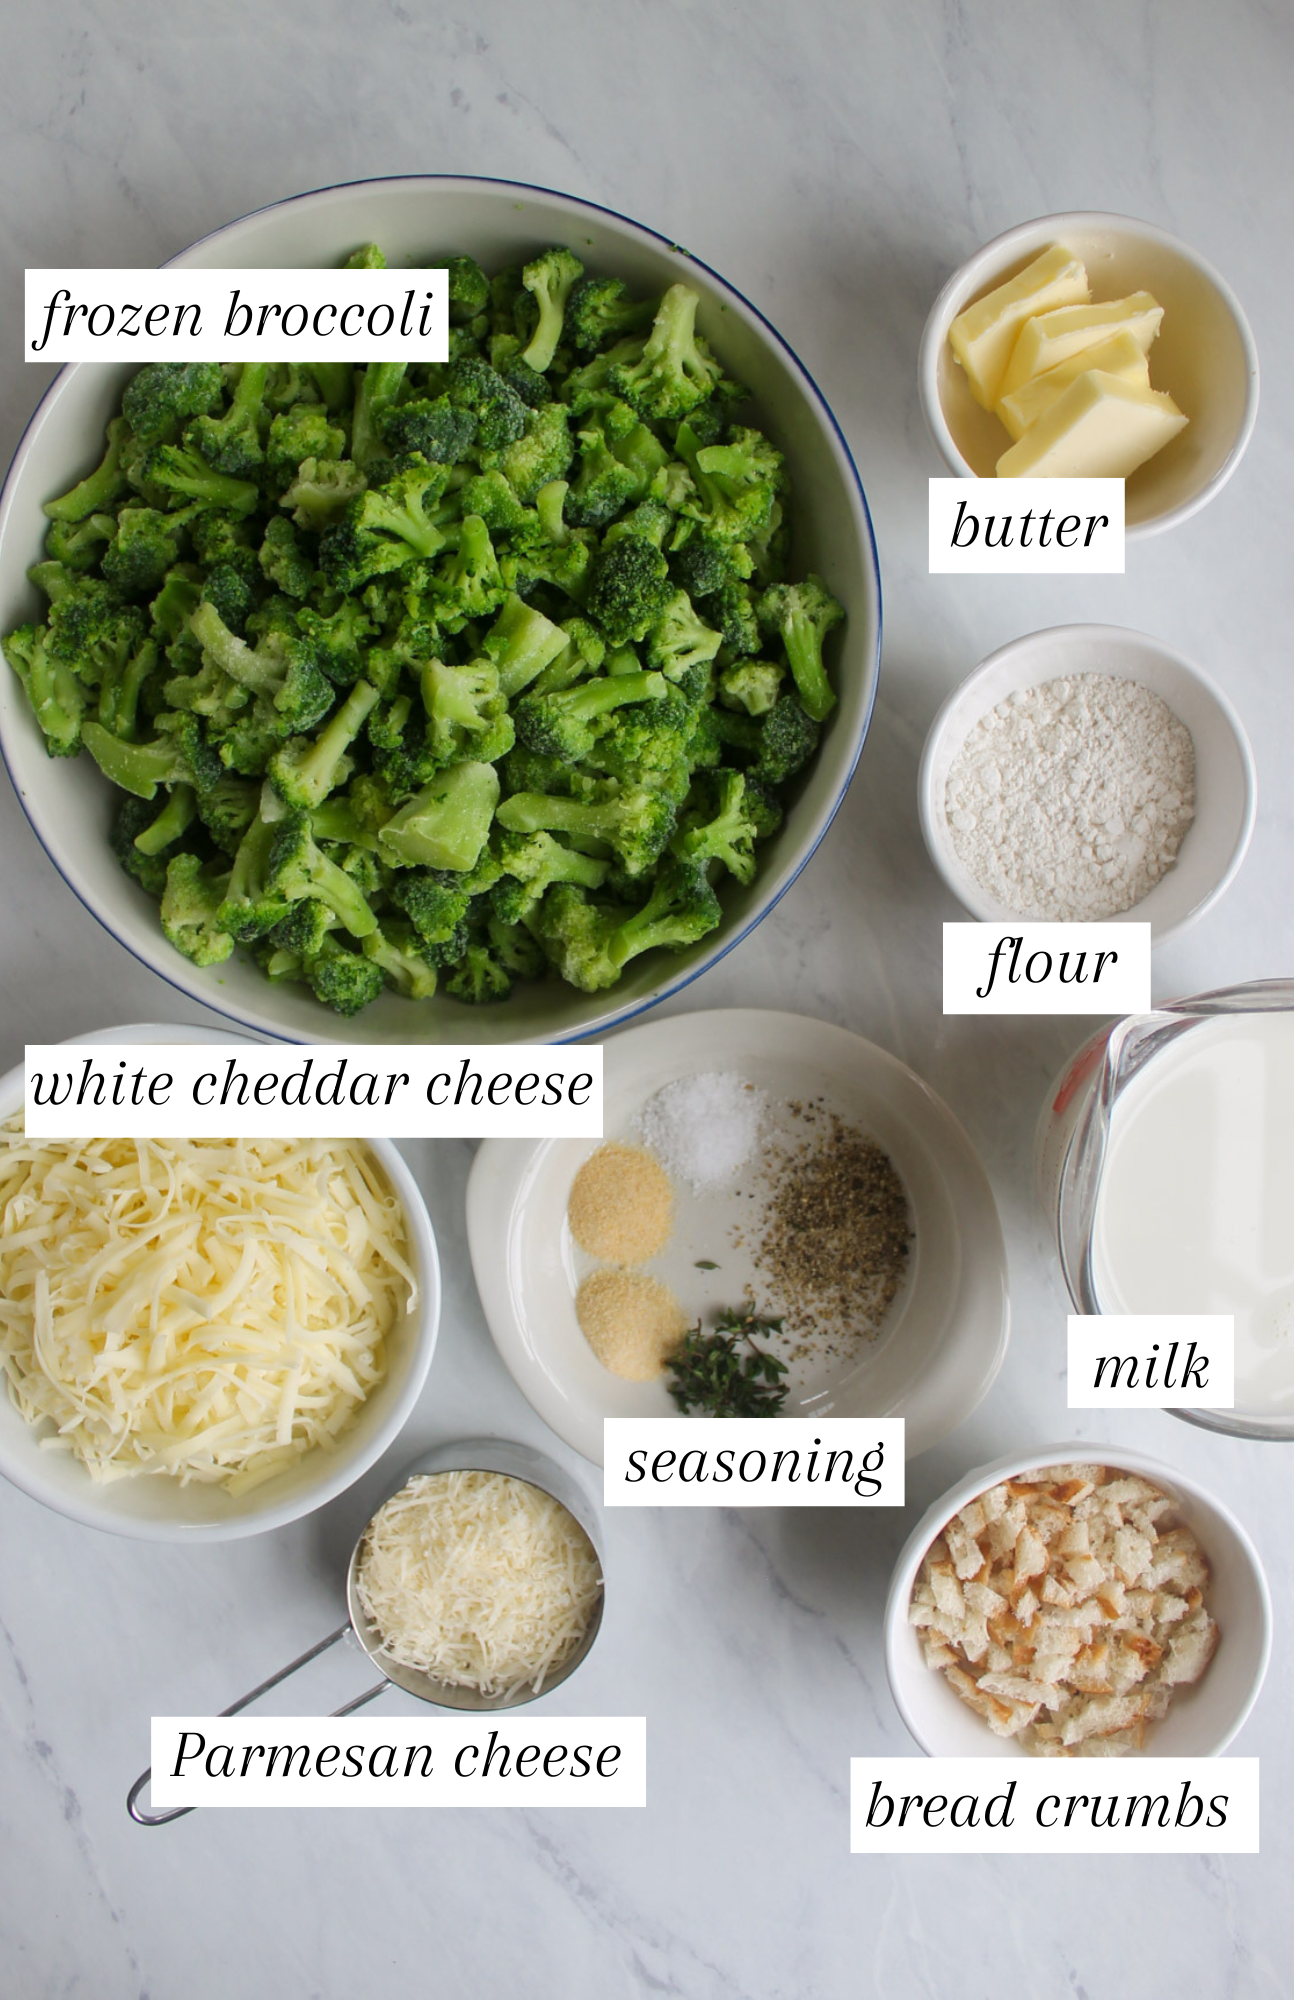 Labeled ingredients for broccoli au gratin.